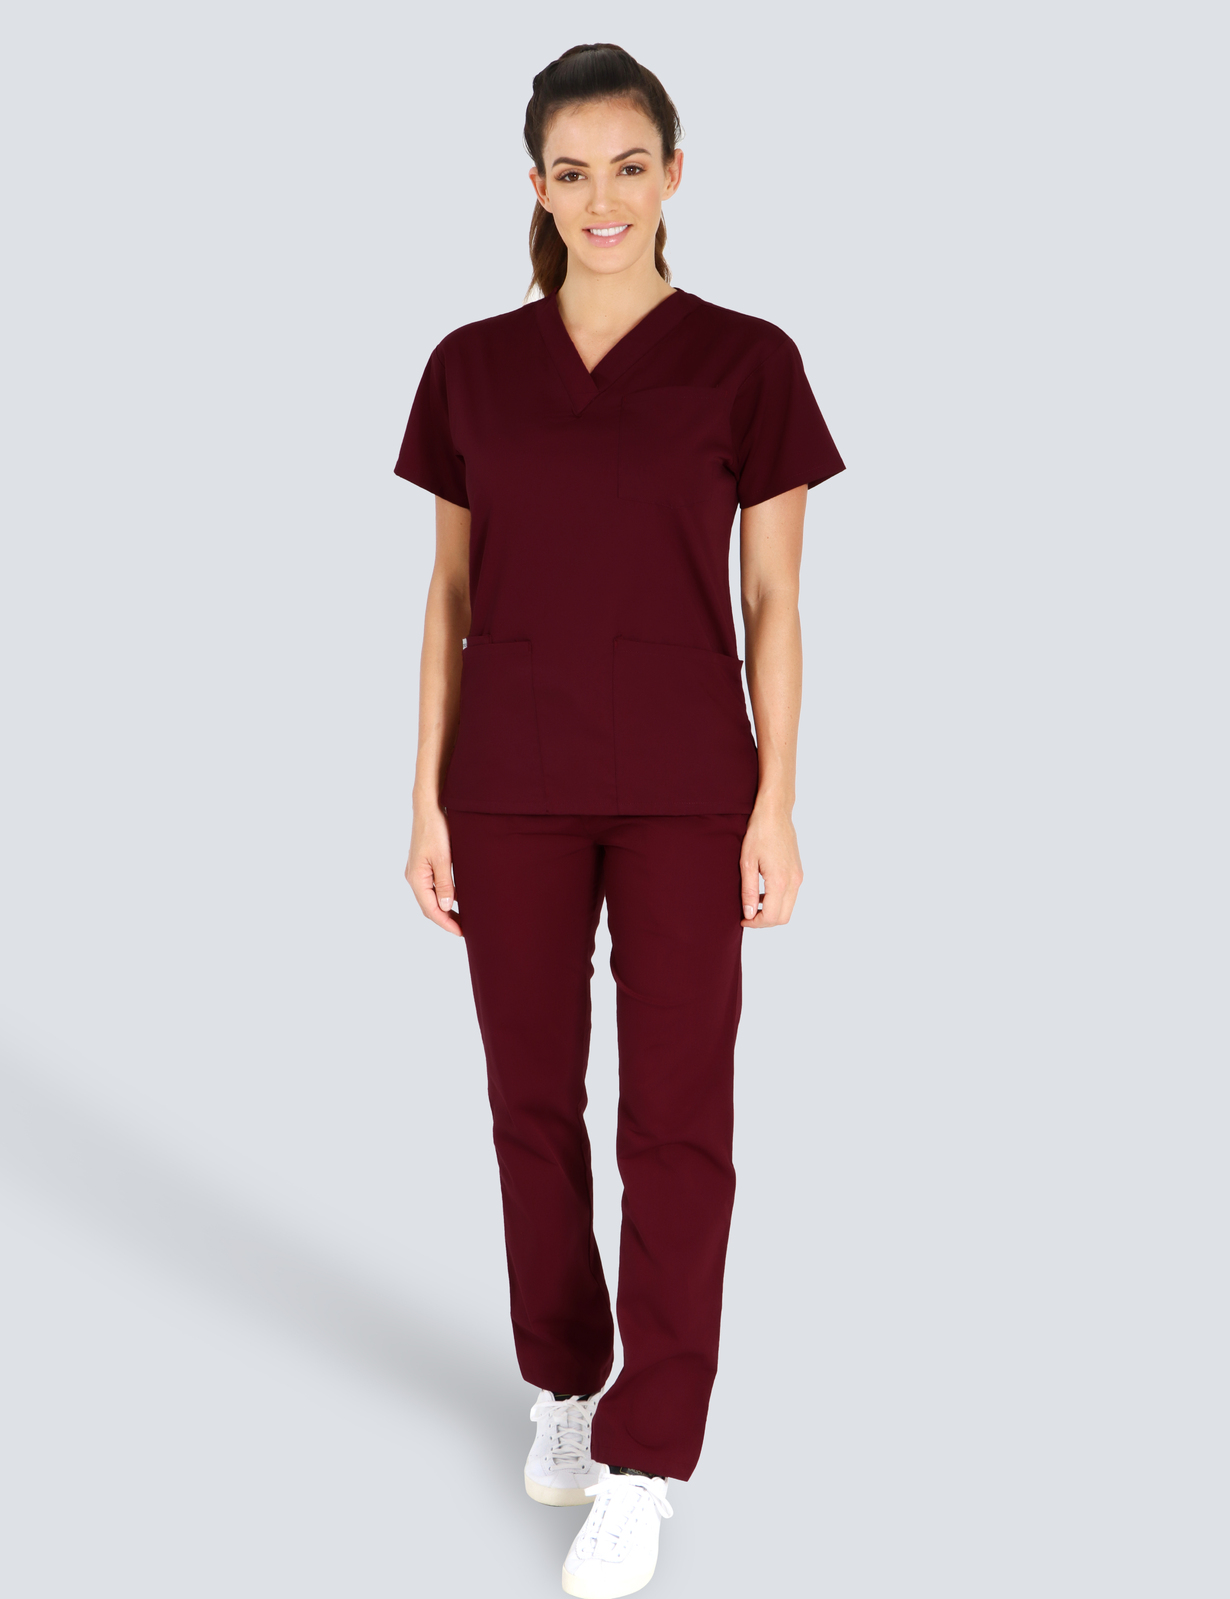 SCPU Hospital - Nursing Practitioner (4 Pocket Scrub Top and Cargo Pants in Burgundy incl Logos)